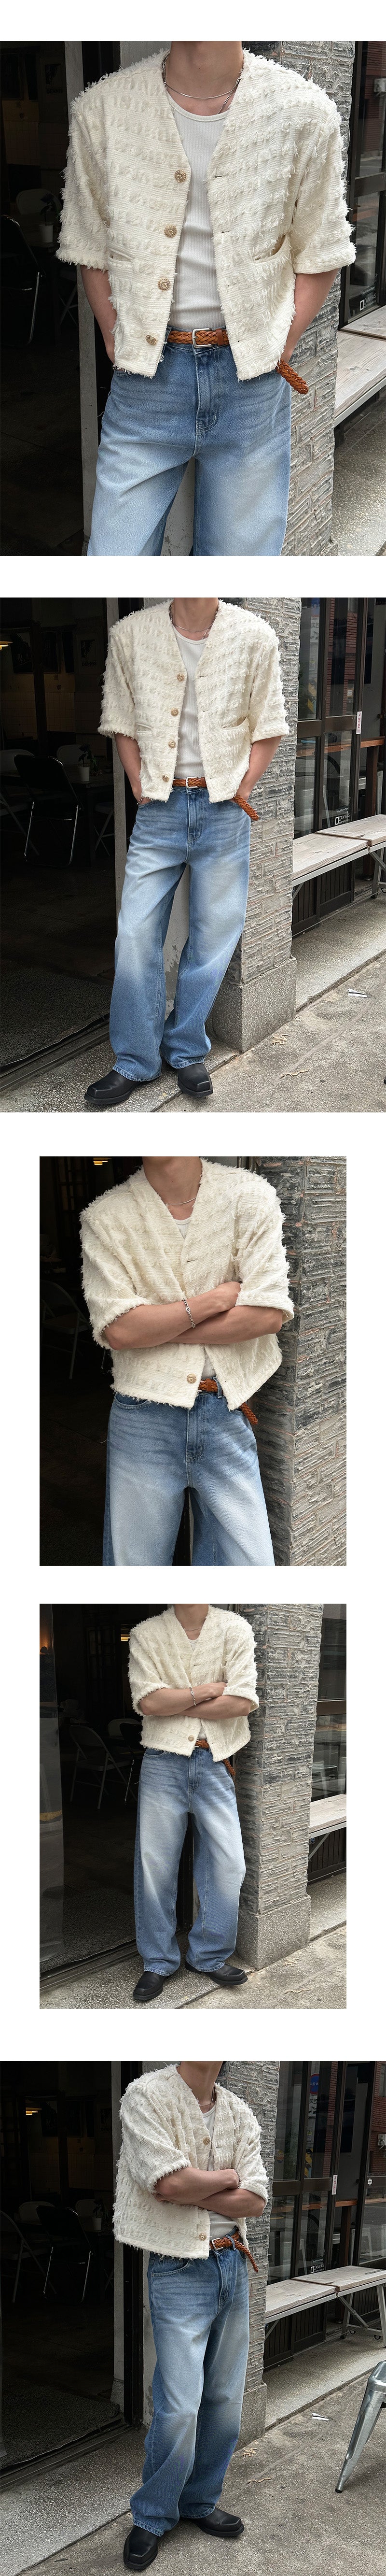 [S/S] Tweed half jacket(2color)